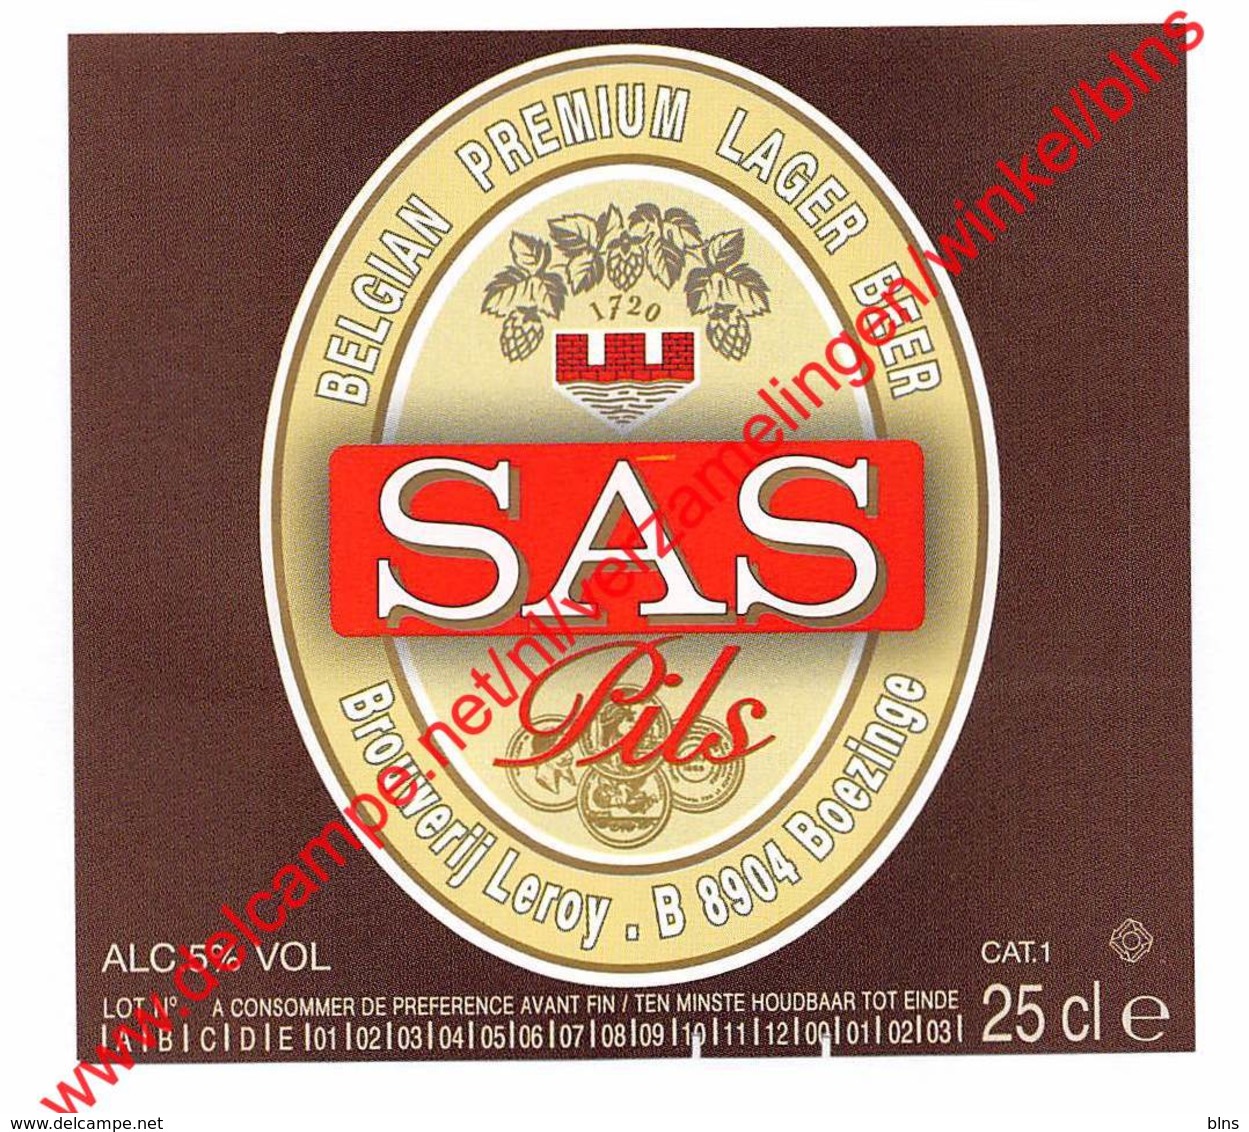 SAS Pils 25cl - Brasserie Leroy Brouwerij Boezinge - Bière